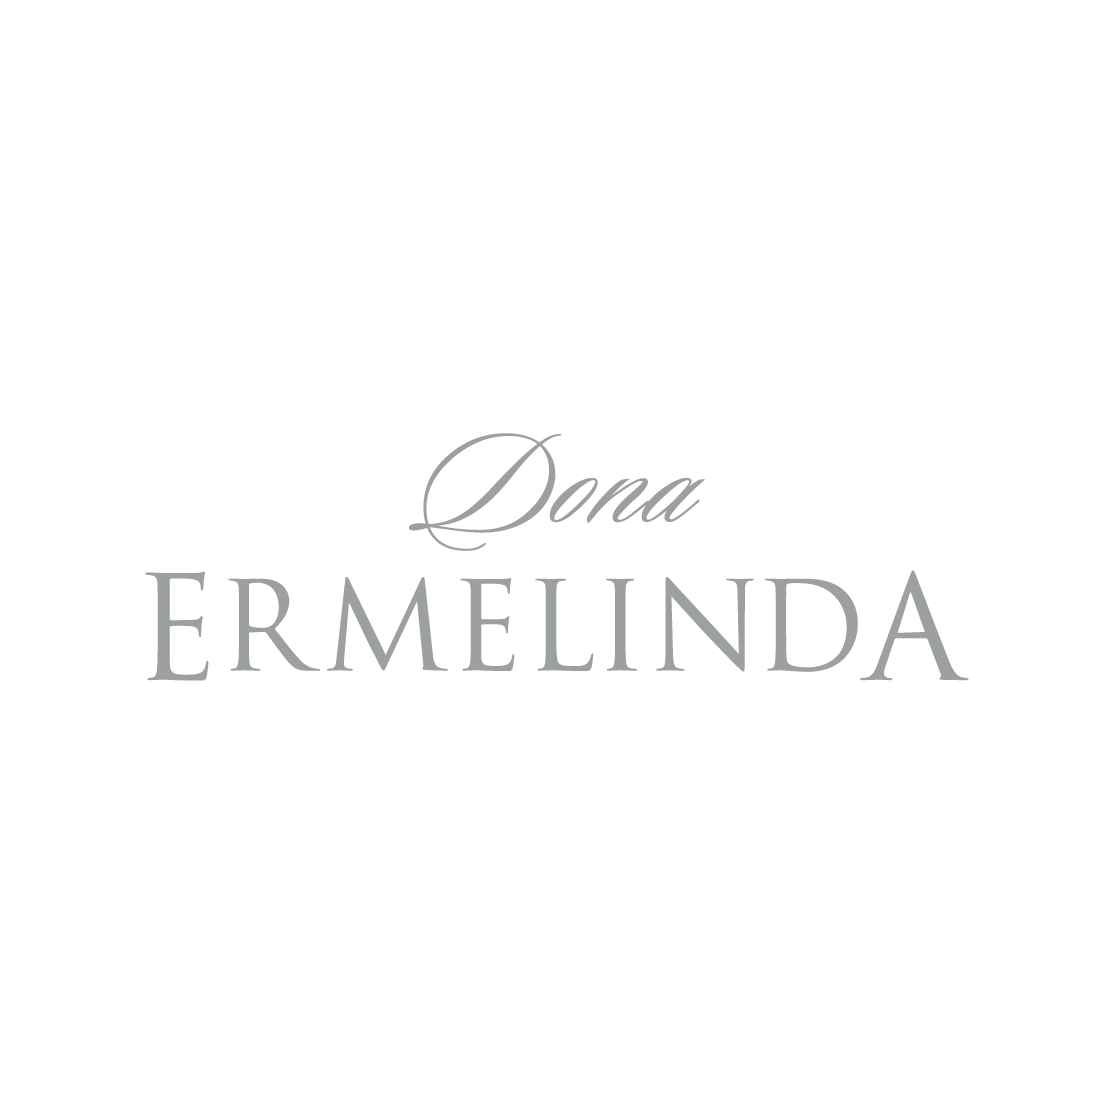 Dona Ermelinda